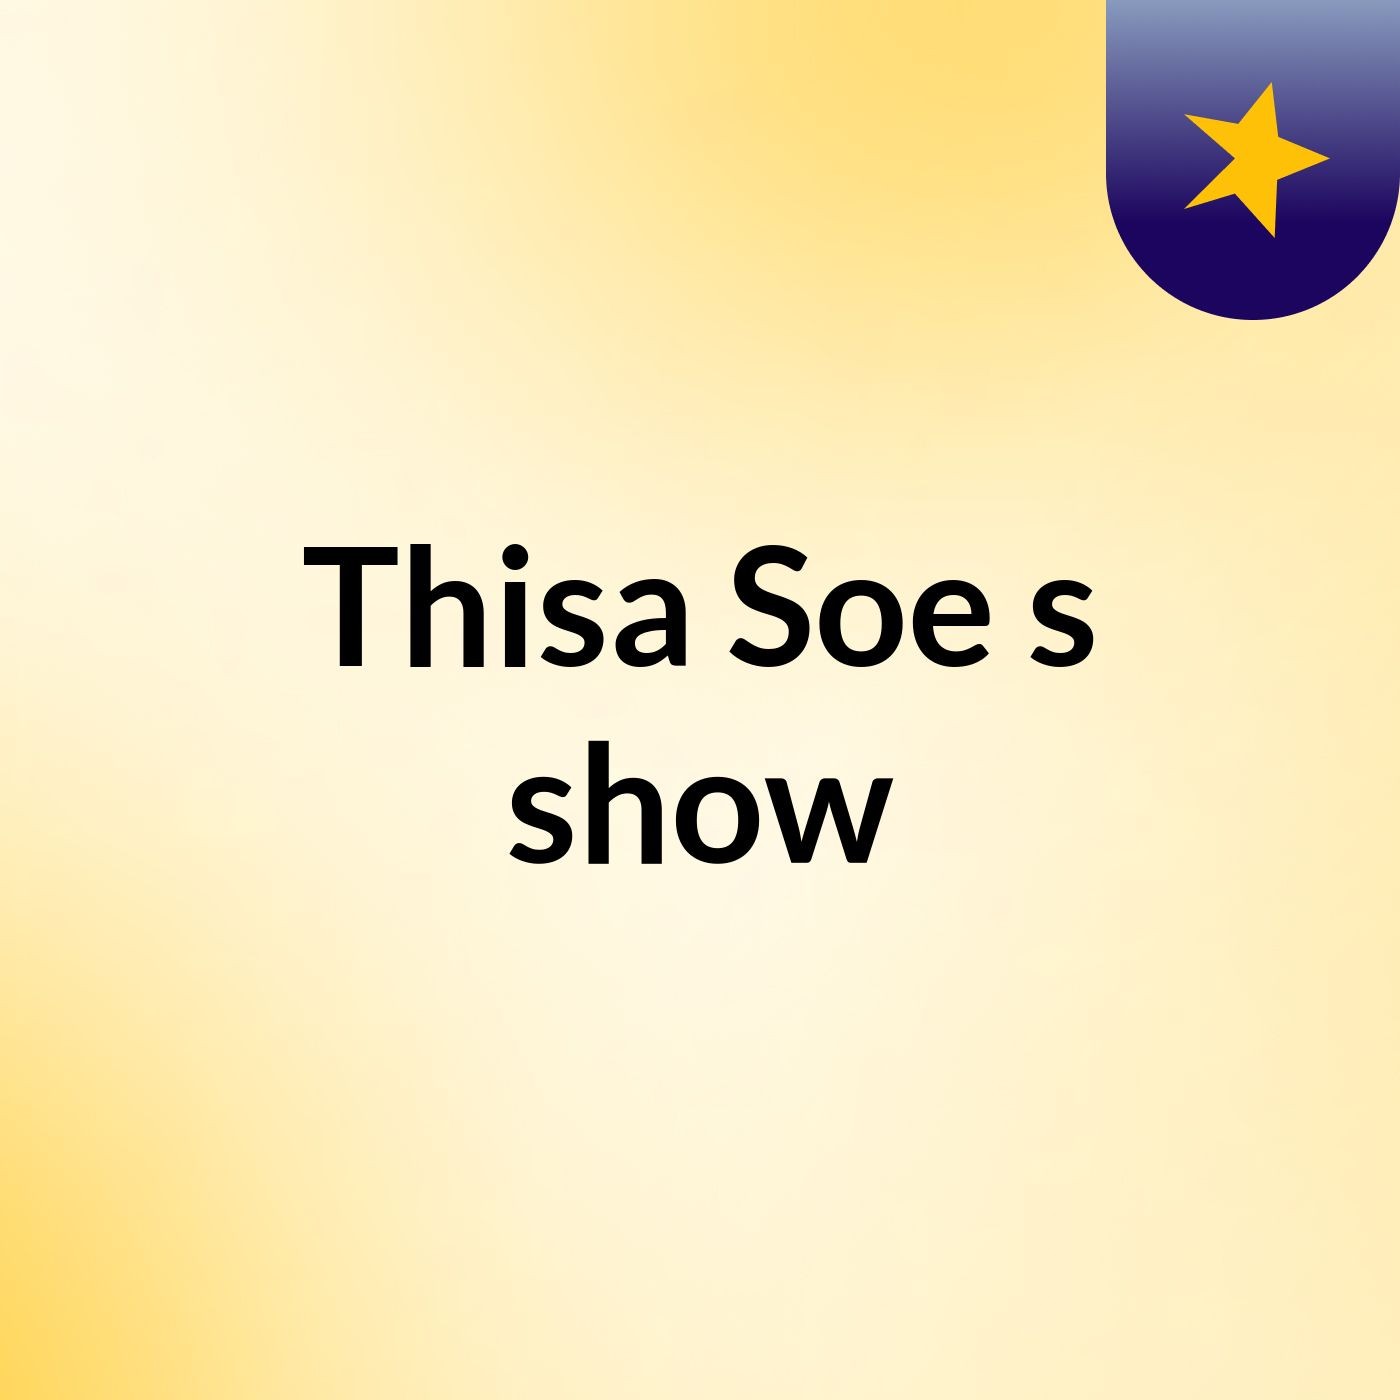 Thisa Soe's show